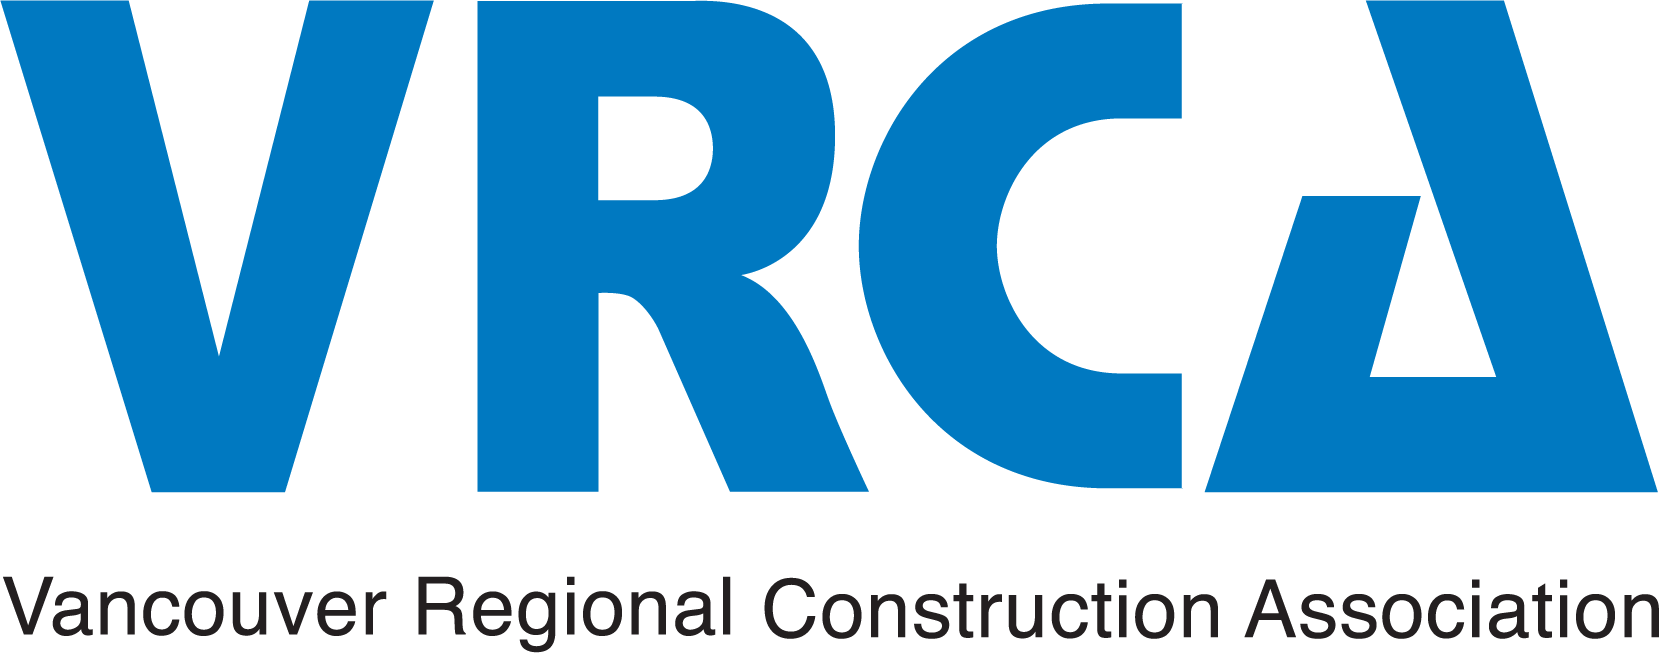 VRCA - Vancouver Regional Construction Association